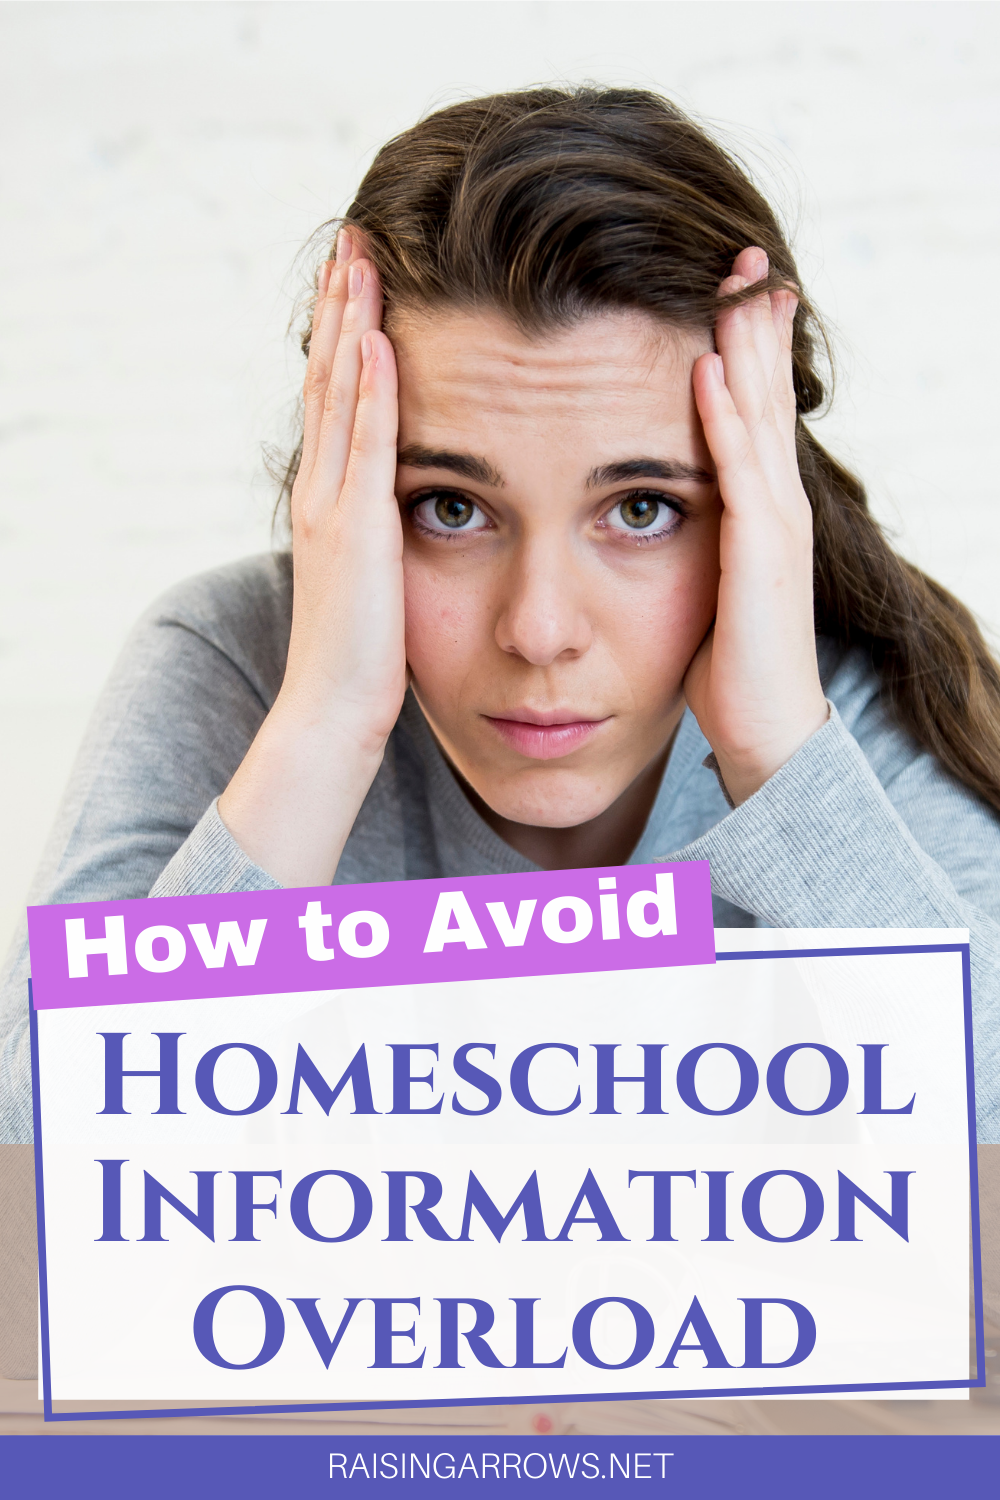 How to Avoid Homeschool Information Overload